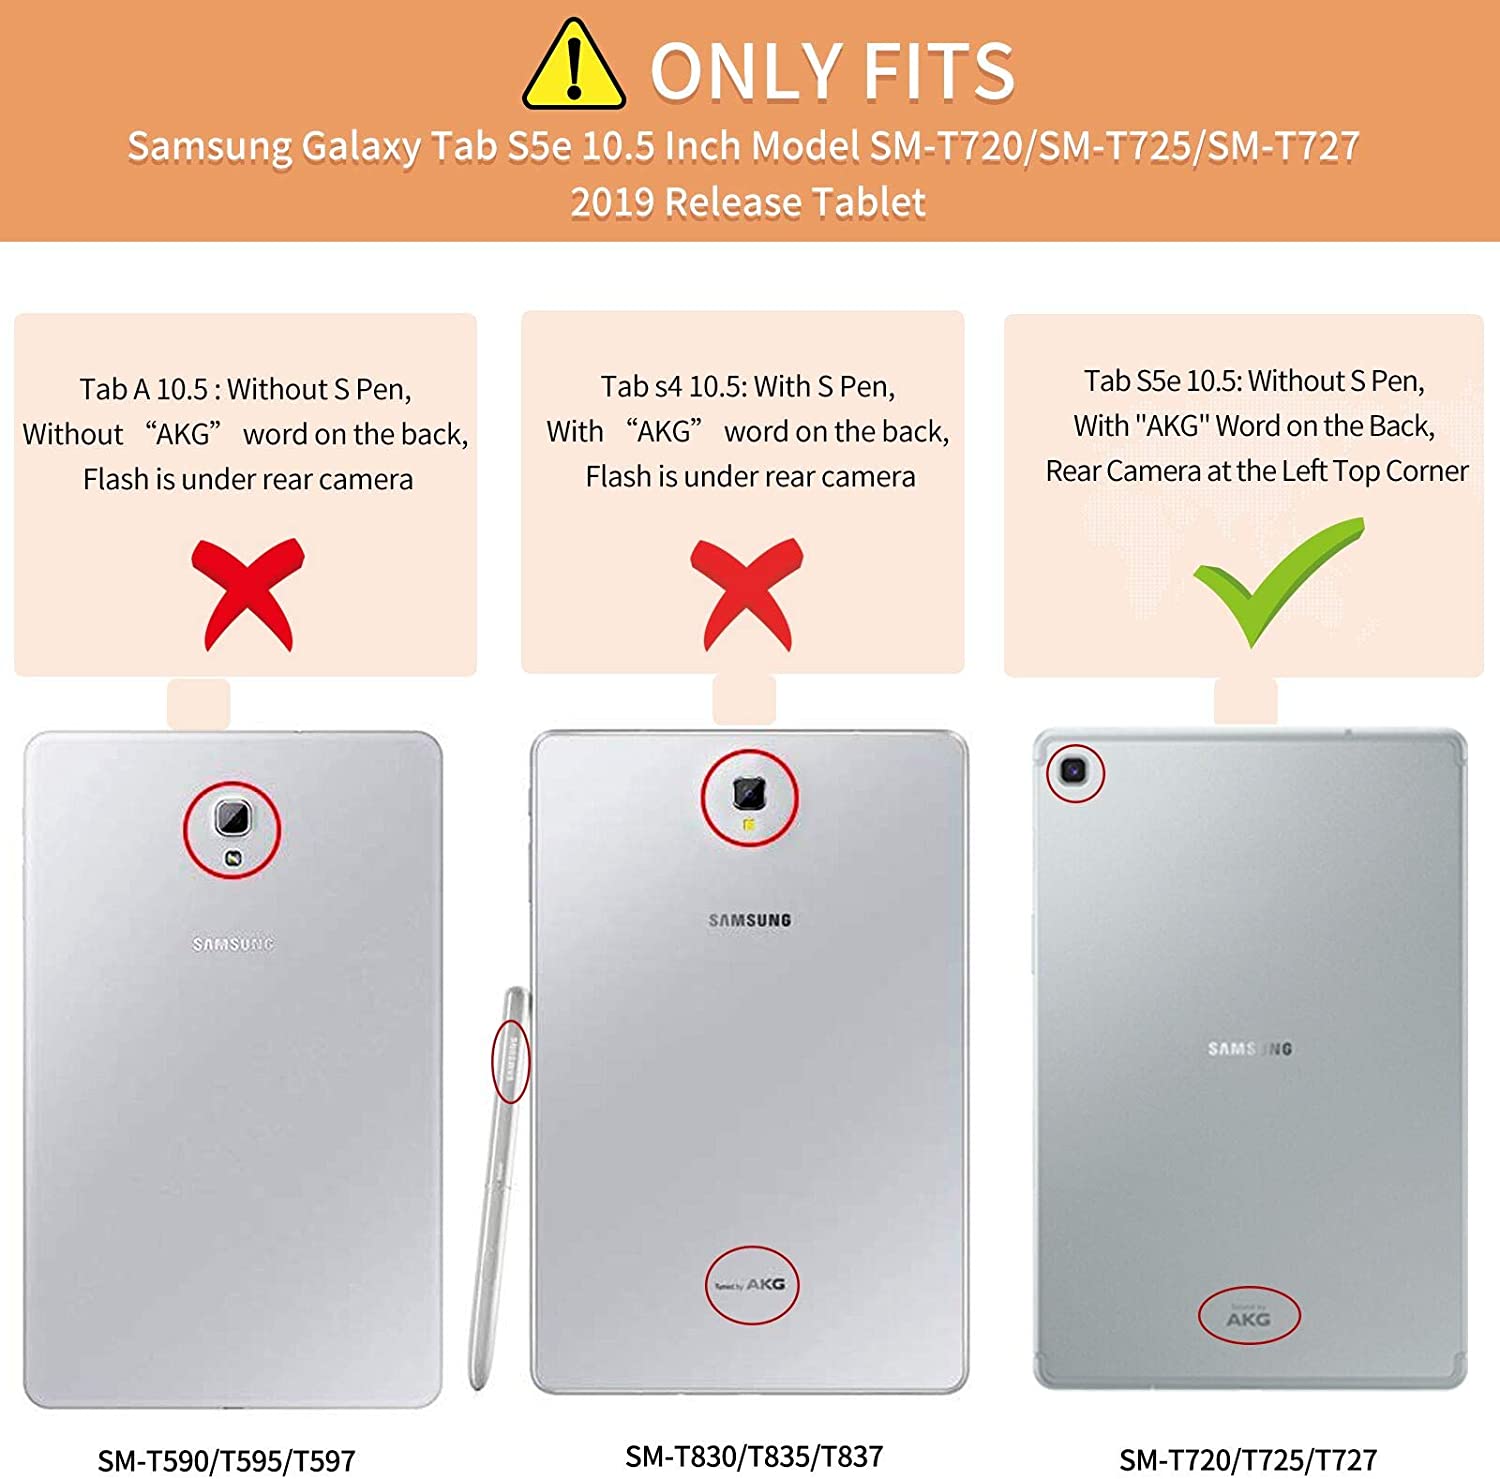 Samsung Galaxy Tab S5e 10.5 Case, Ultra Slim Tri-Fold Shell Cover Compatible with Samsung Galaxy Tab S5e 10.5 Inch Model SM-T720/SM-T725 2019 Release, Navy - e4cents